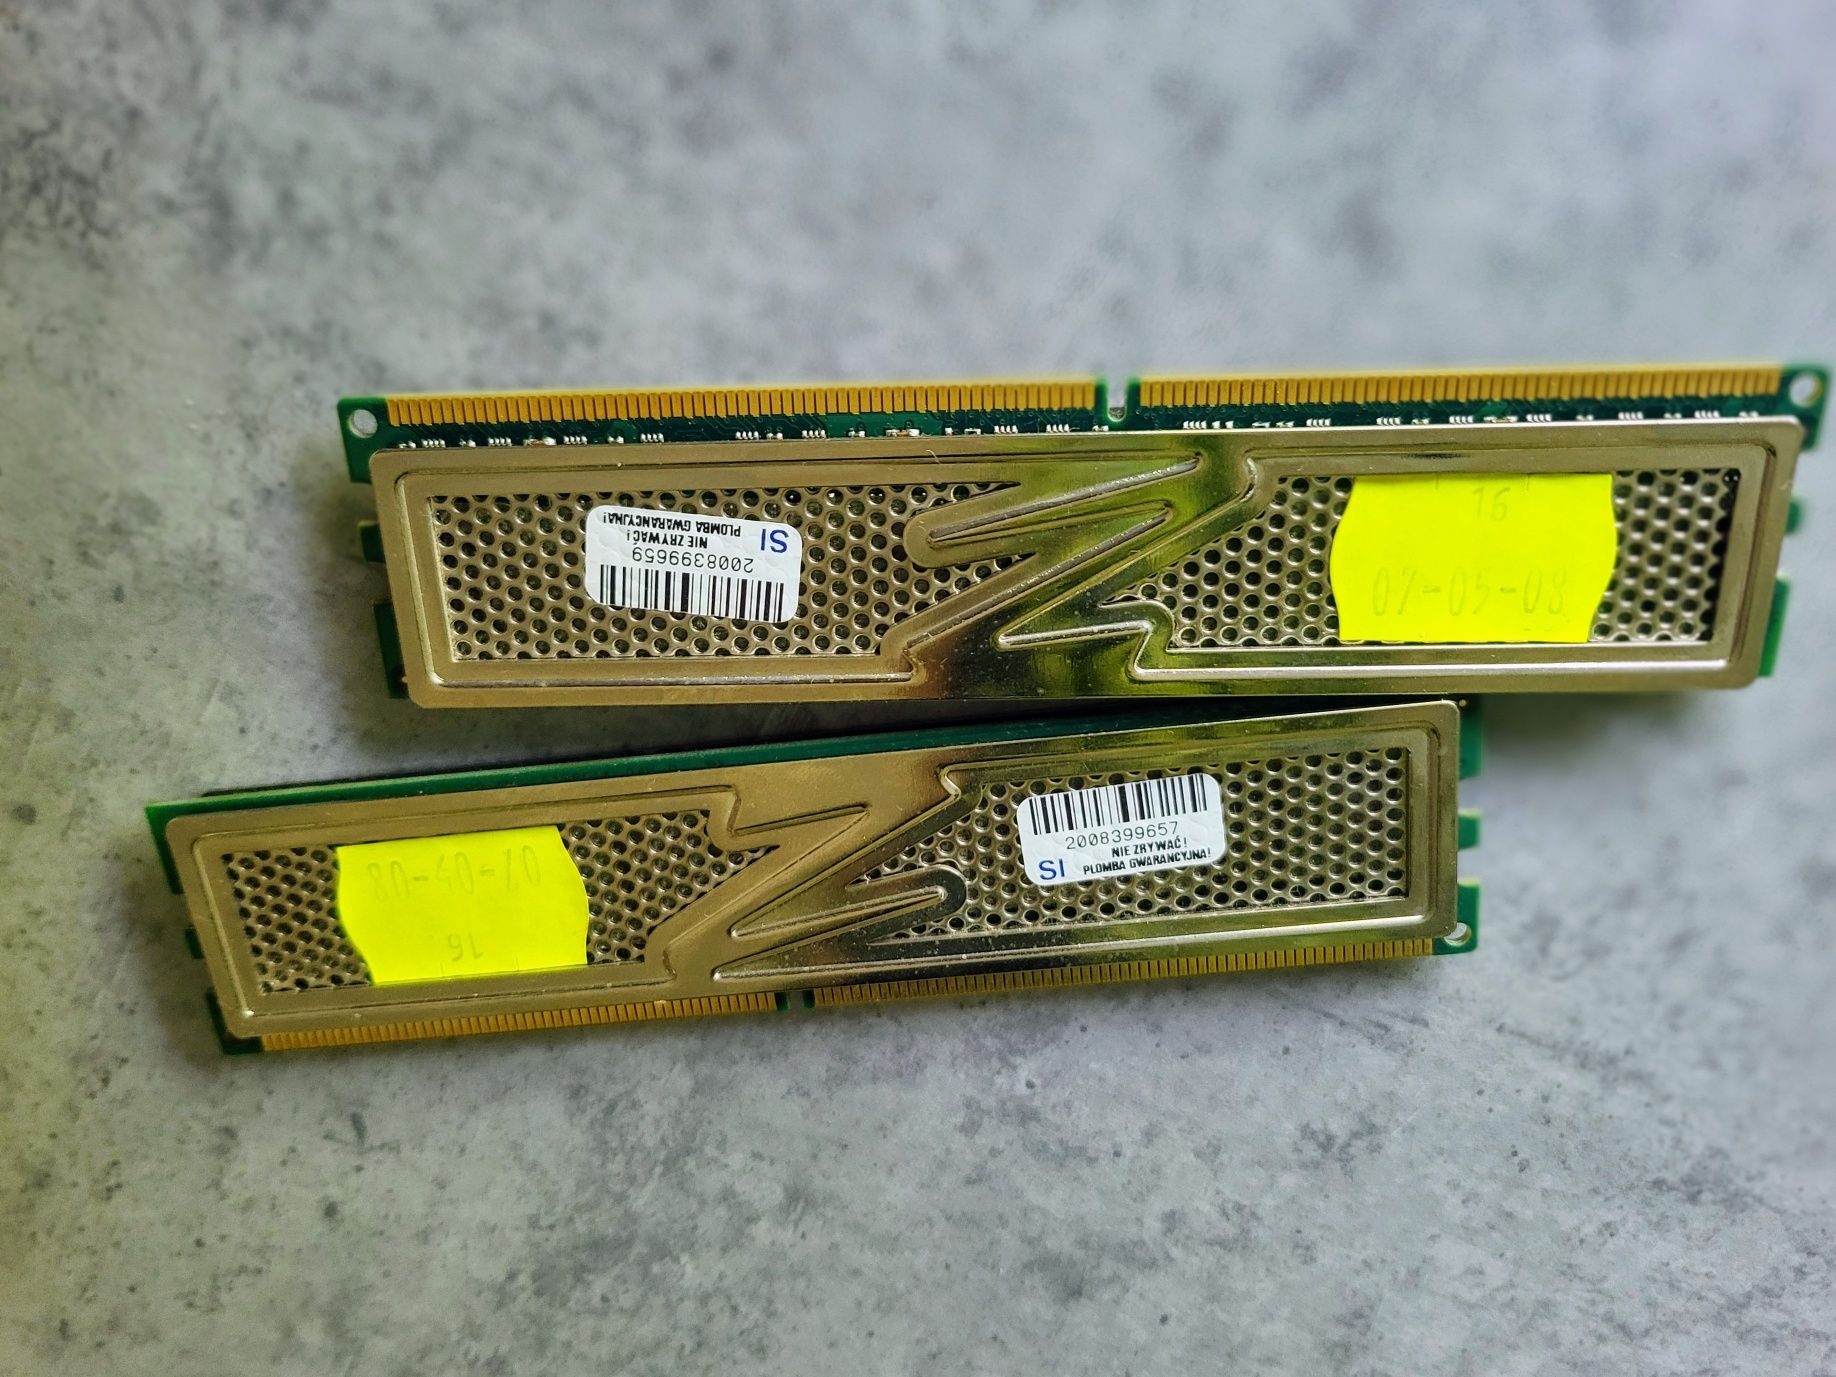 Dwie pamięci  OCZ2P800R22GK 1GB OCZ DDR2 PlatinumEdition800MHz